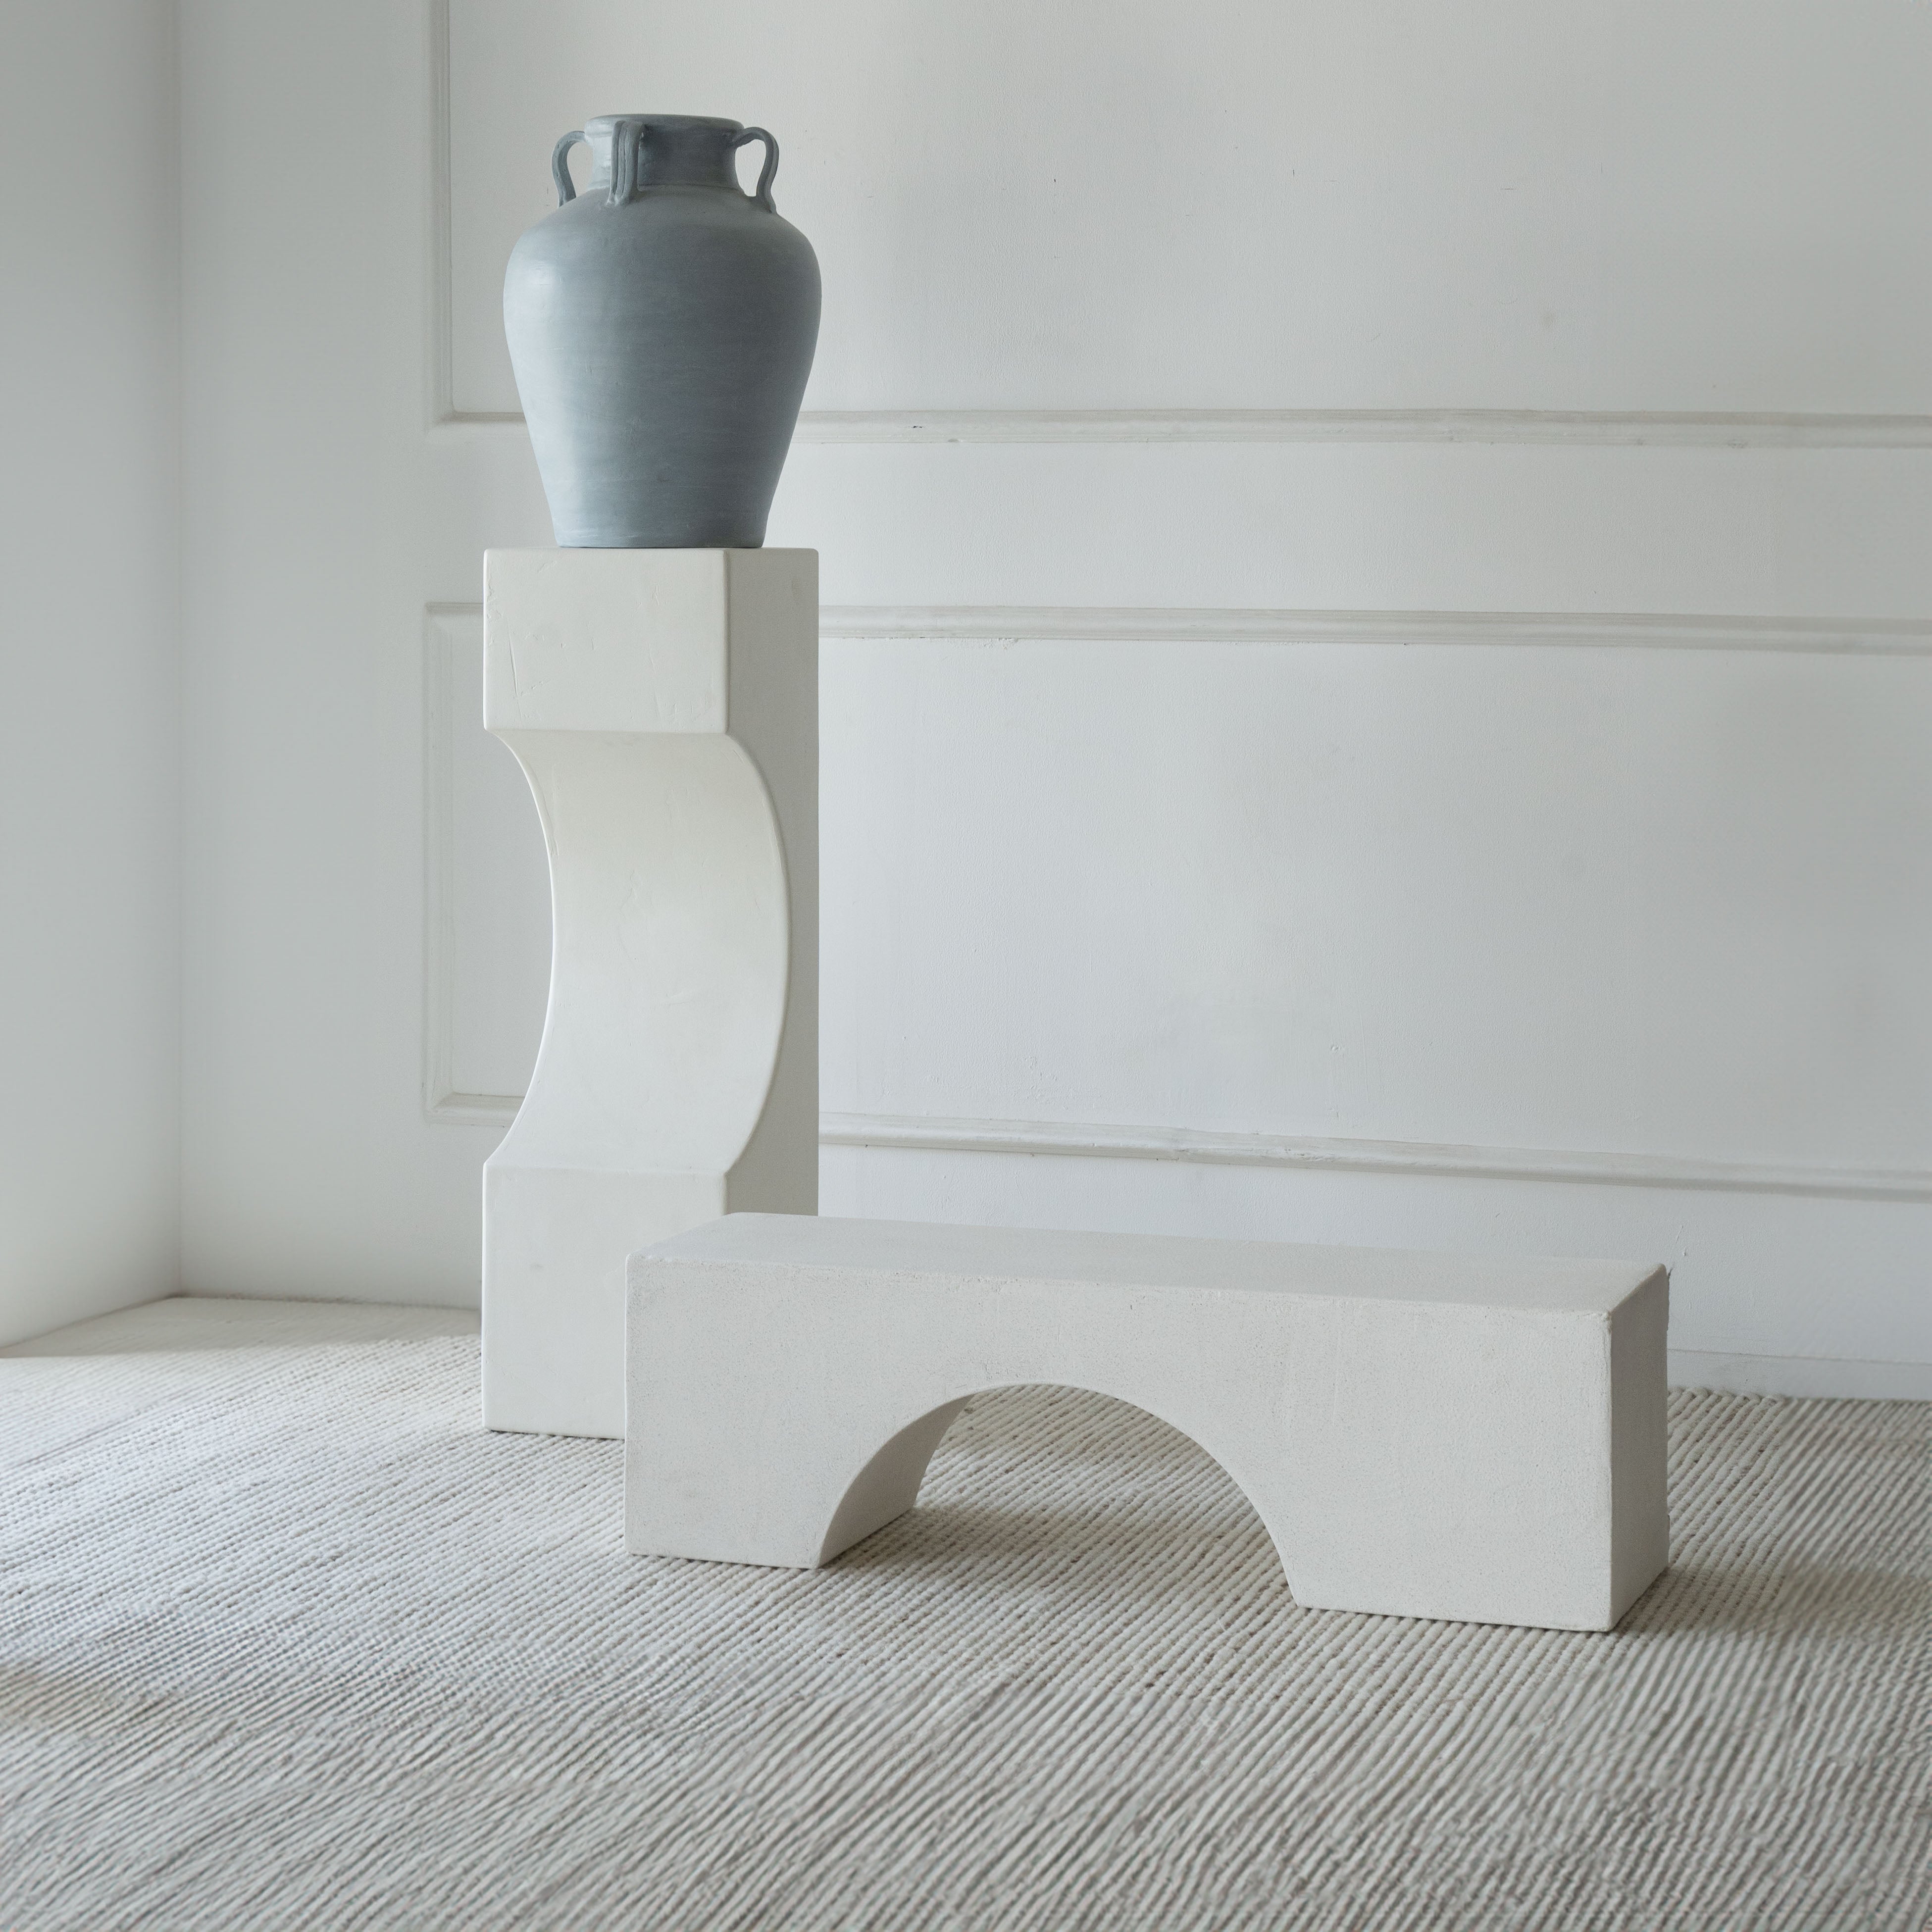 Geometric Pedestal - Wood and Steel Furnitures